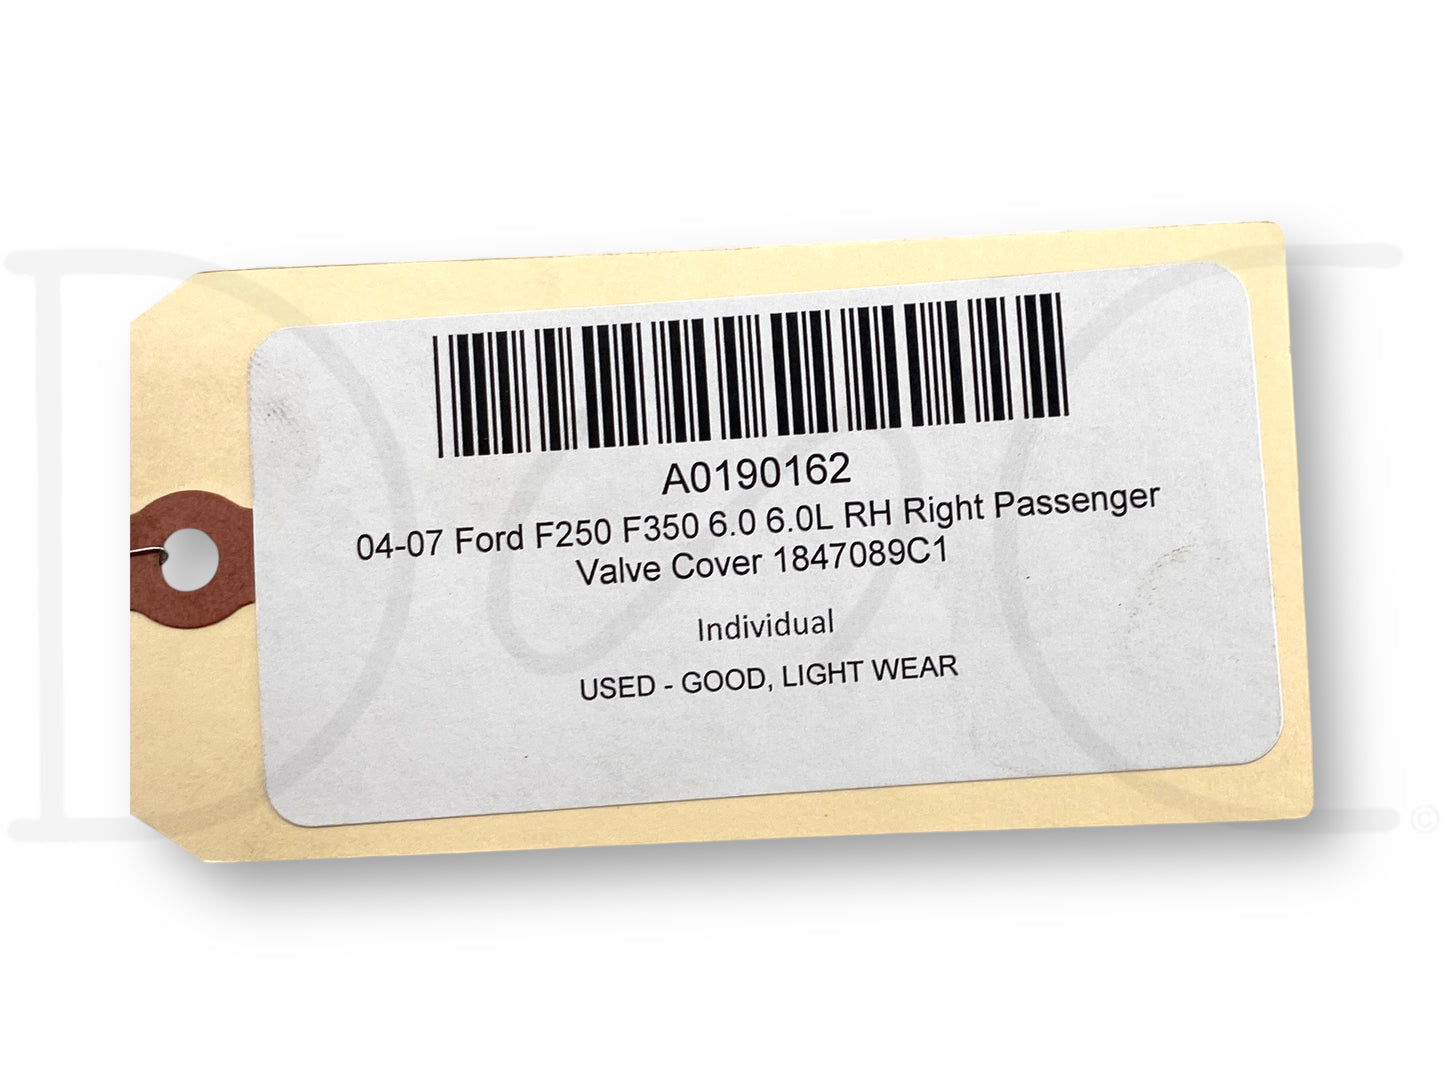 04-07 Ford F250 F350 6.0 6.0L RH Right Passenger Valve Cover 1847089C1